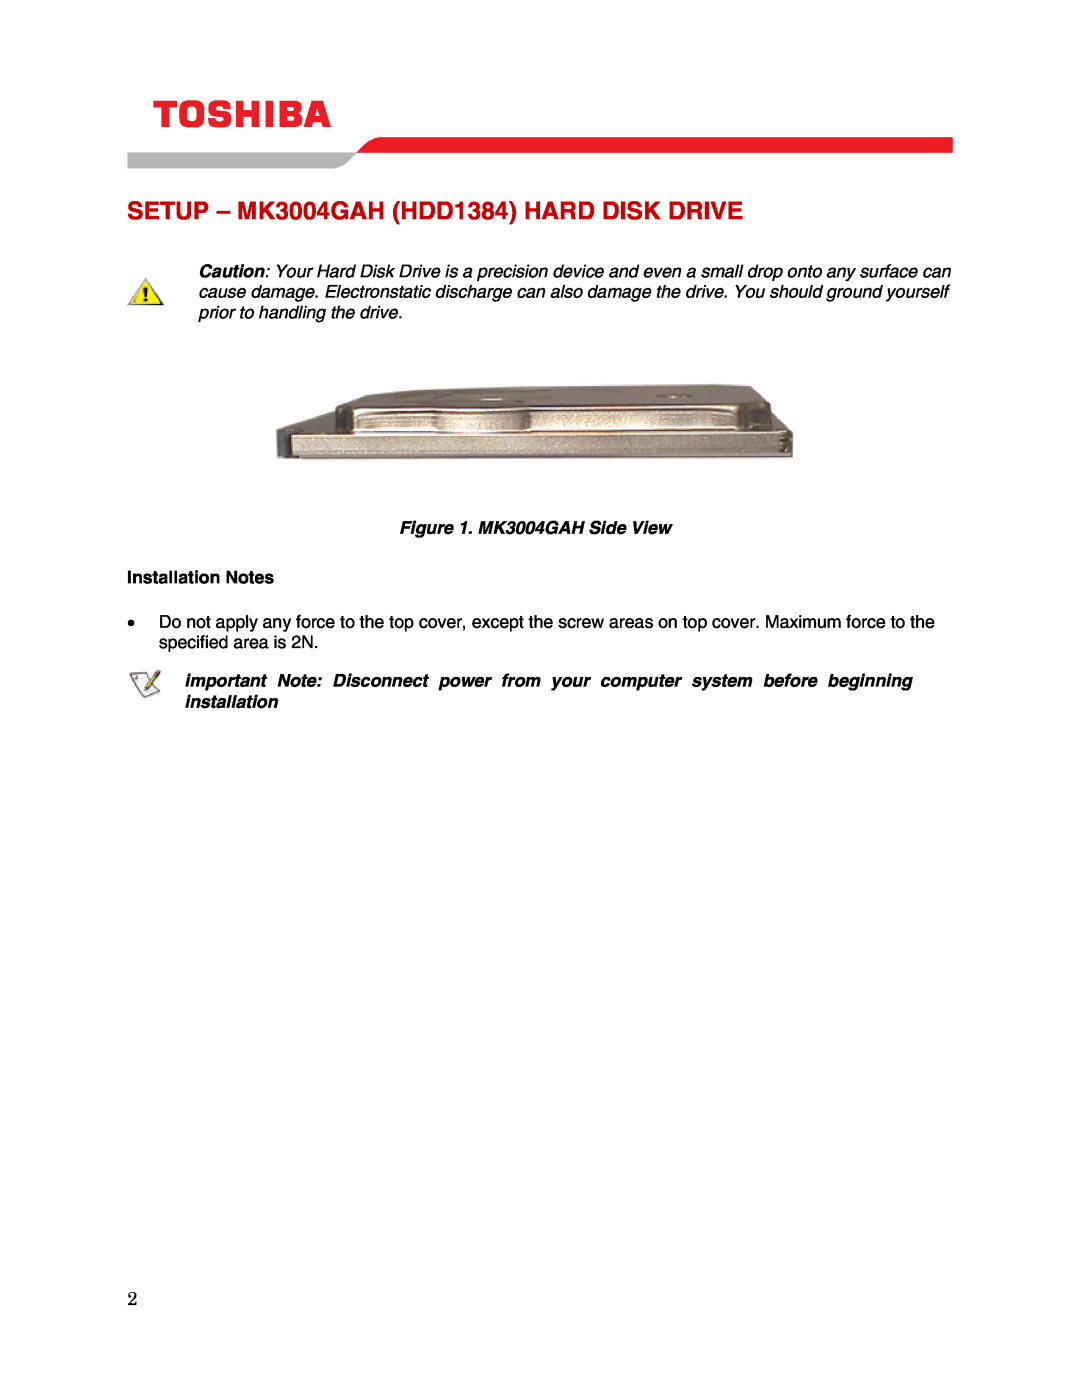 Toshiba user manual SETUP - MK3004GAH HDD1384 HARD DISK DRIVE, MK3004GAH Side View, Installation Notes 